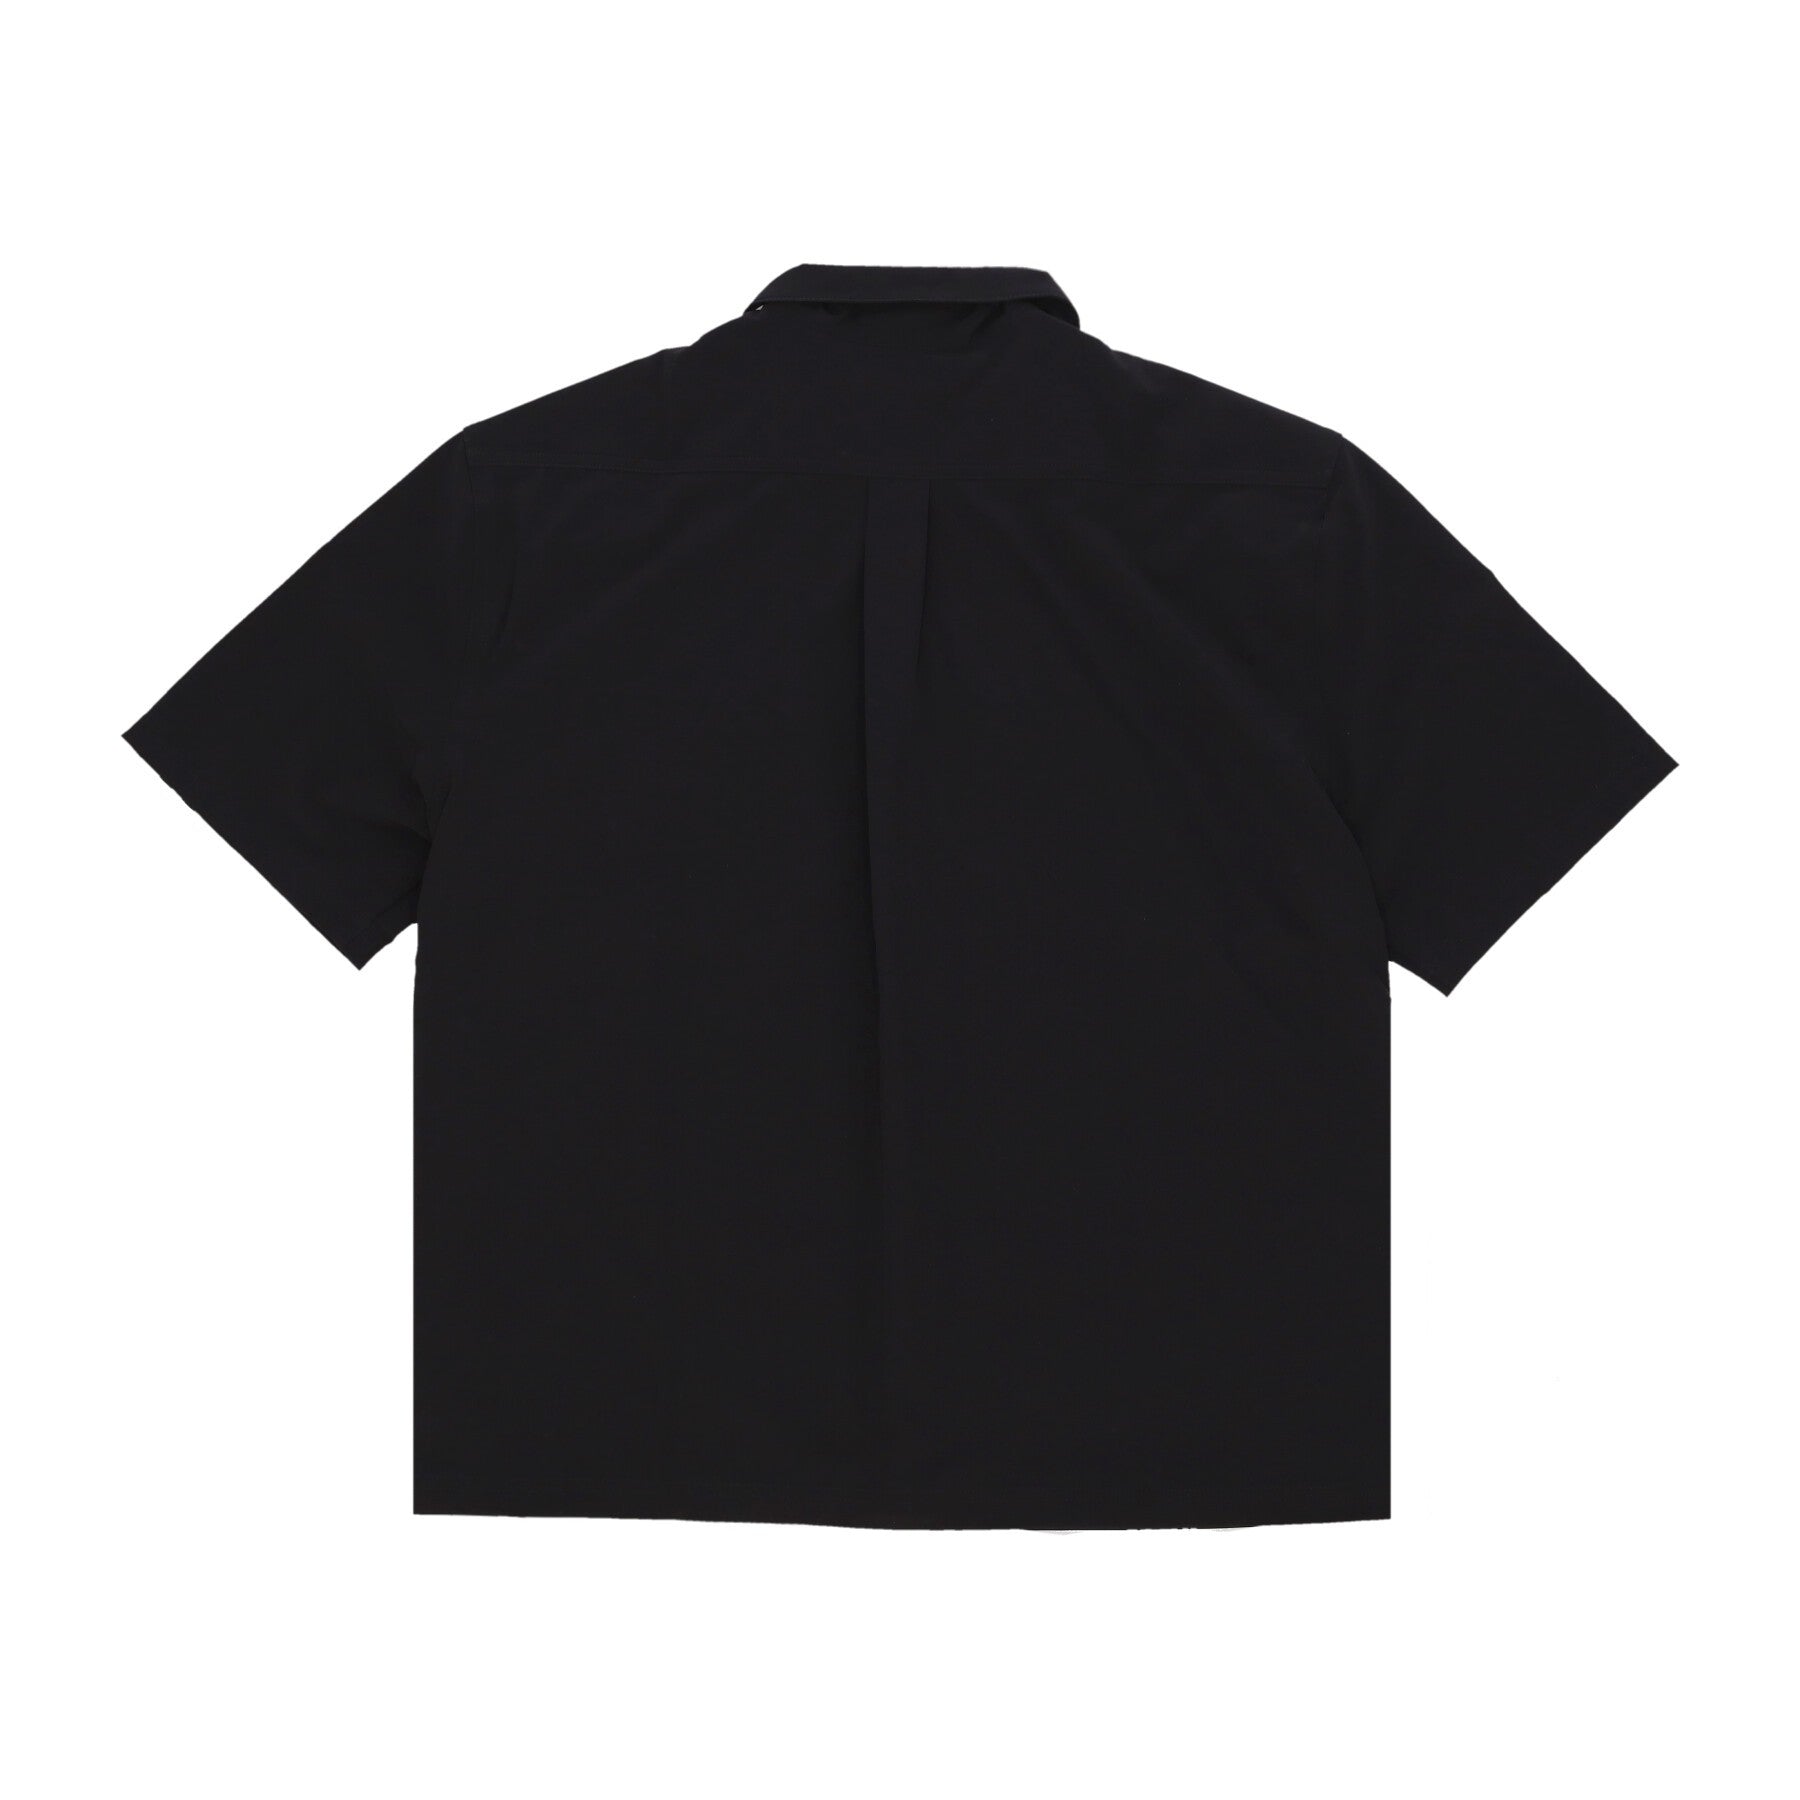 Classics Shirt Black Men's Short Sleeve Shirt